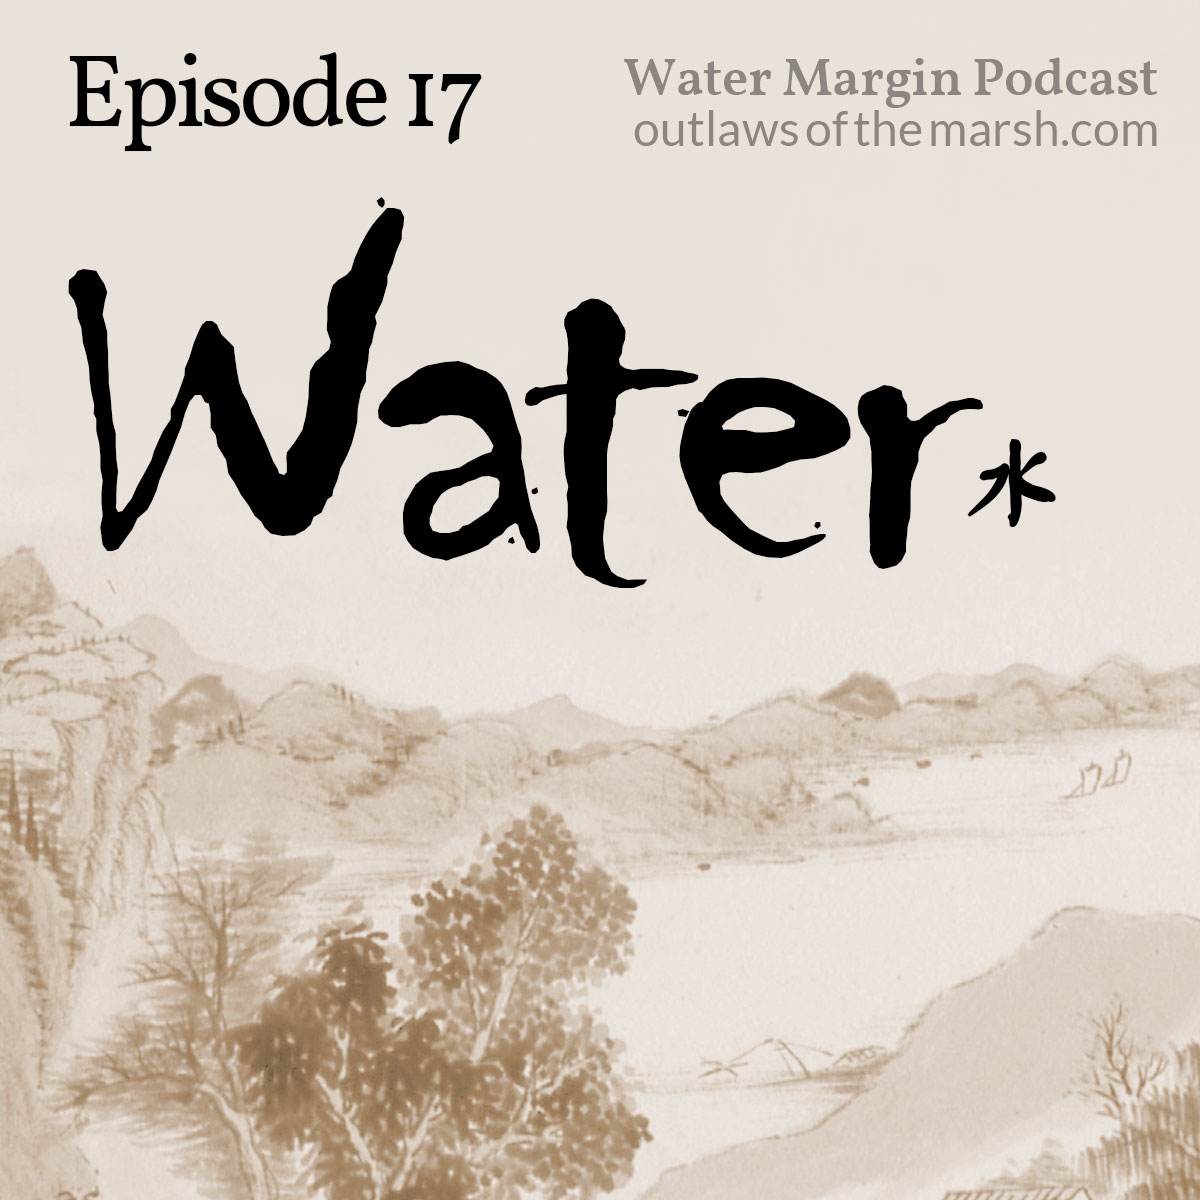 Water Margin Podcast: Episode 017